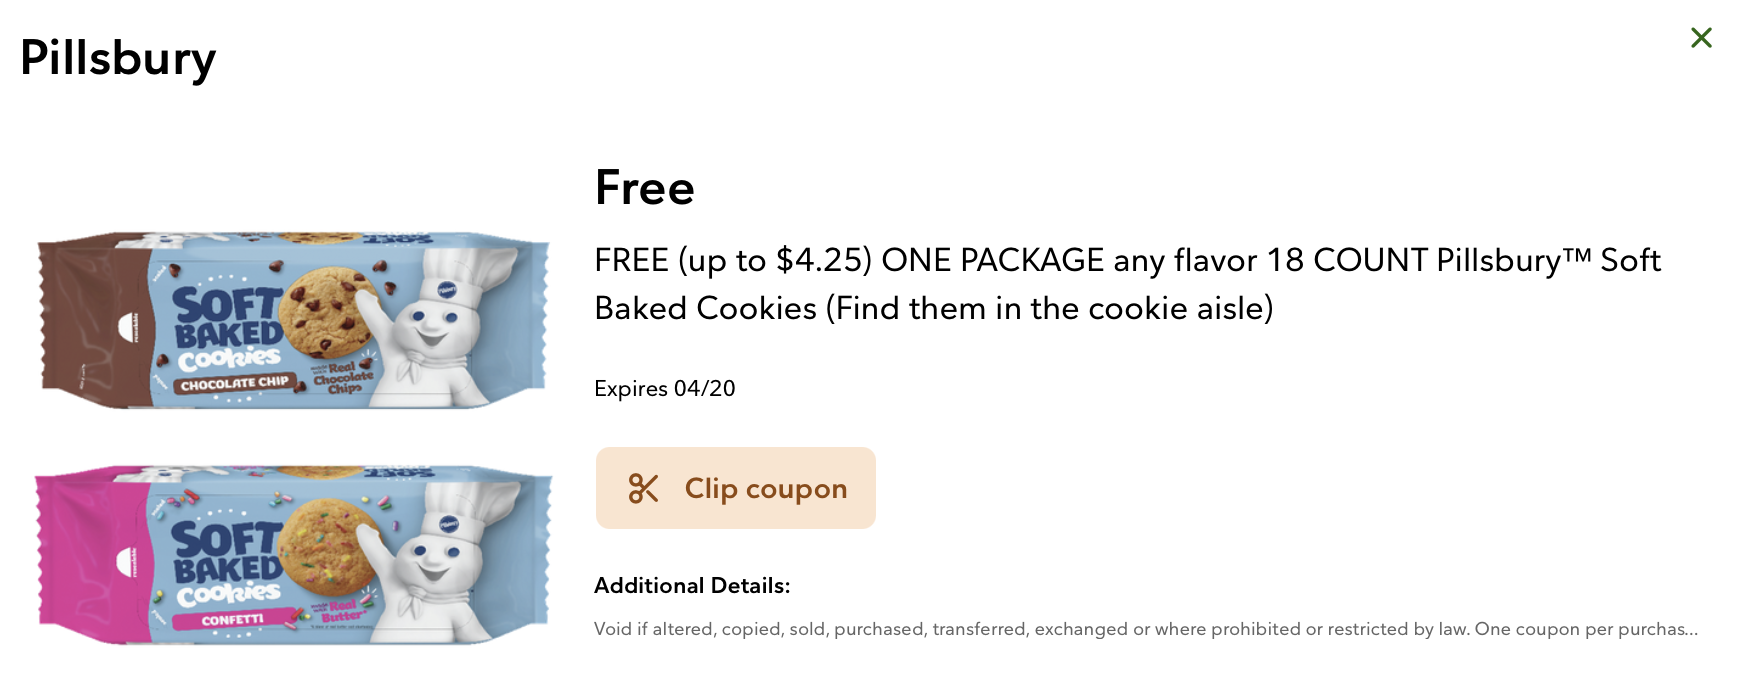 FREE Pillsbury Soft Baked Cookies At Publix on I Heart Publix